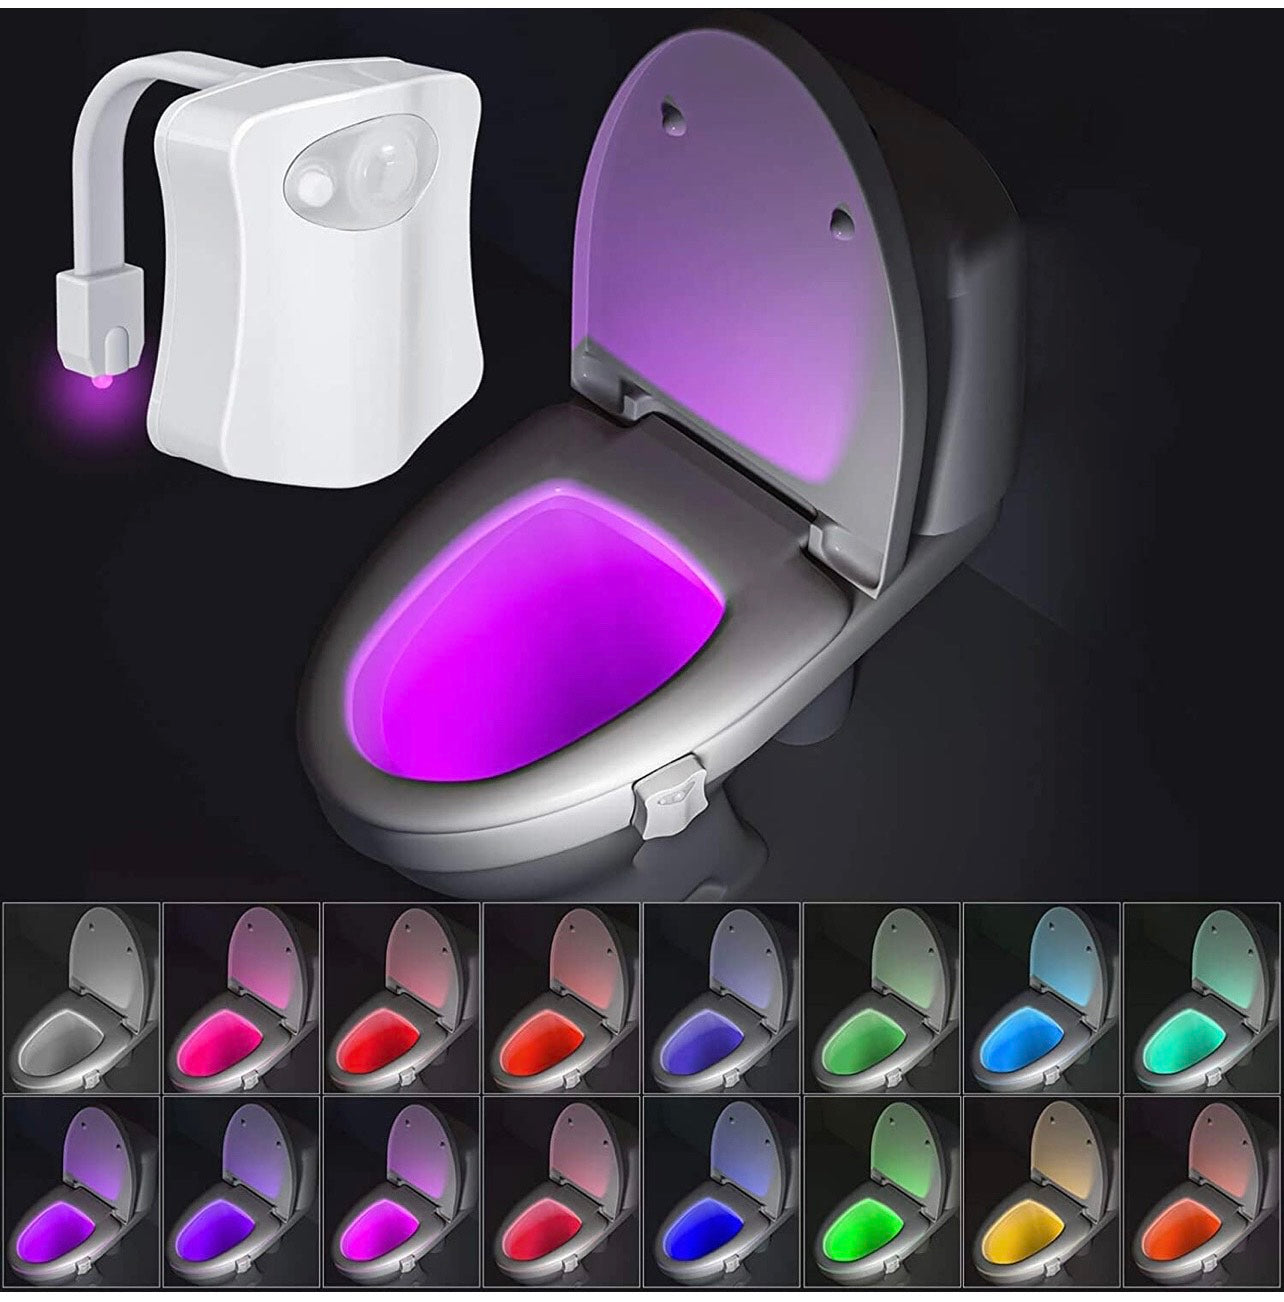 Toilet Night Lights inside Glow Bowl 3 Pack, Motion Sensor Activated & 16  LED Co